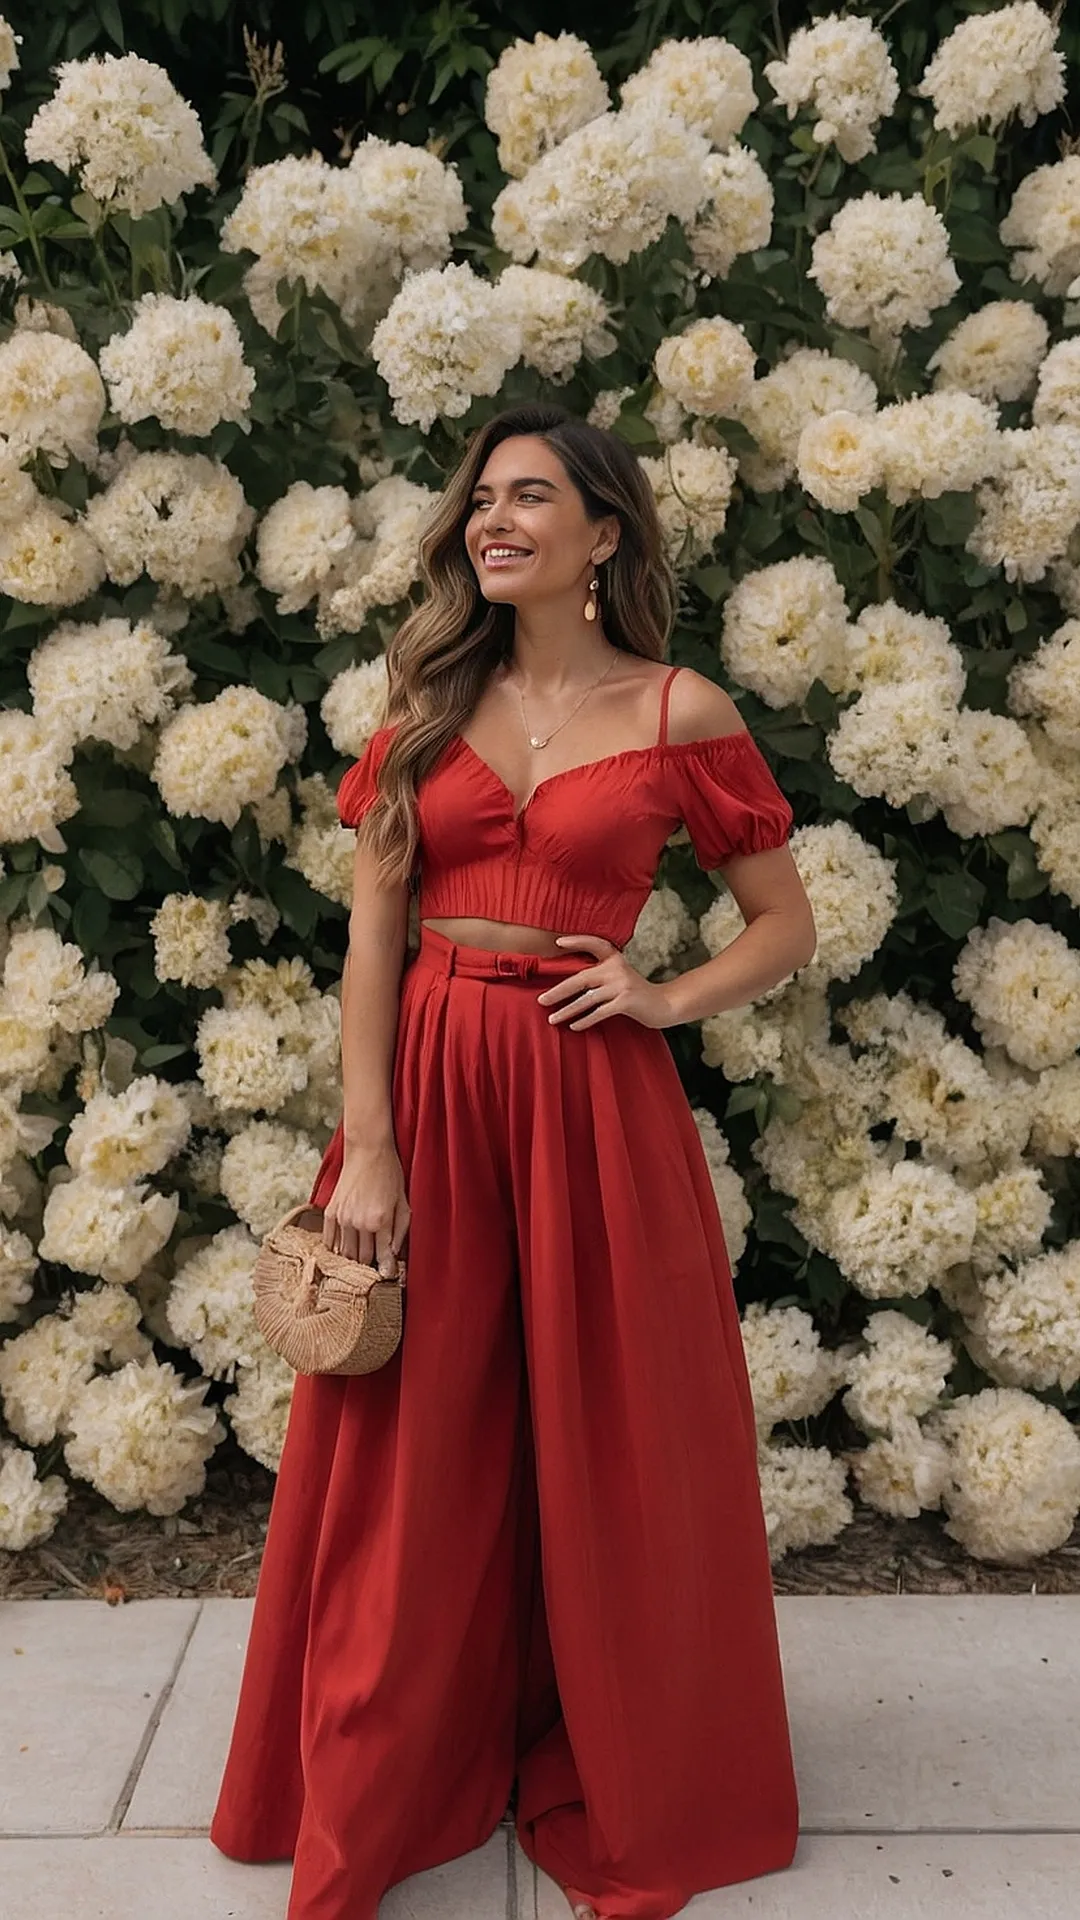 Vibrant Vermilion: Fashionable Red Women's Looks